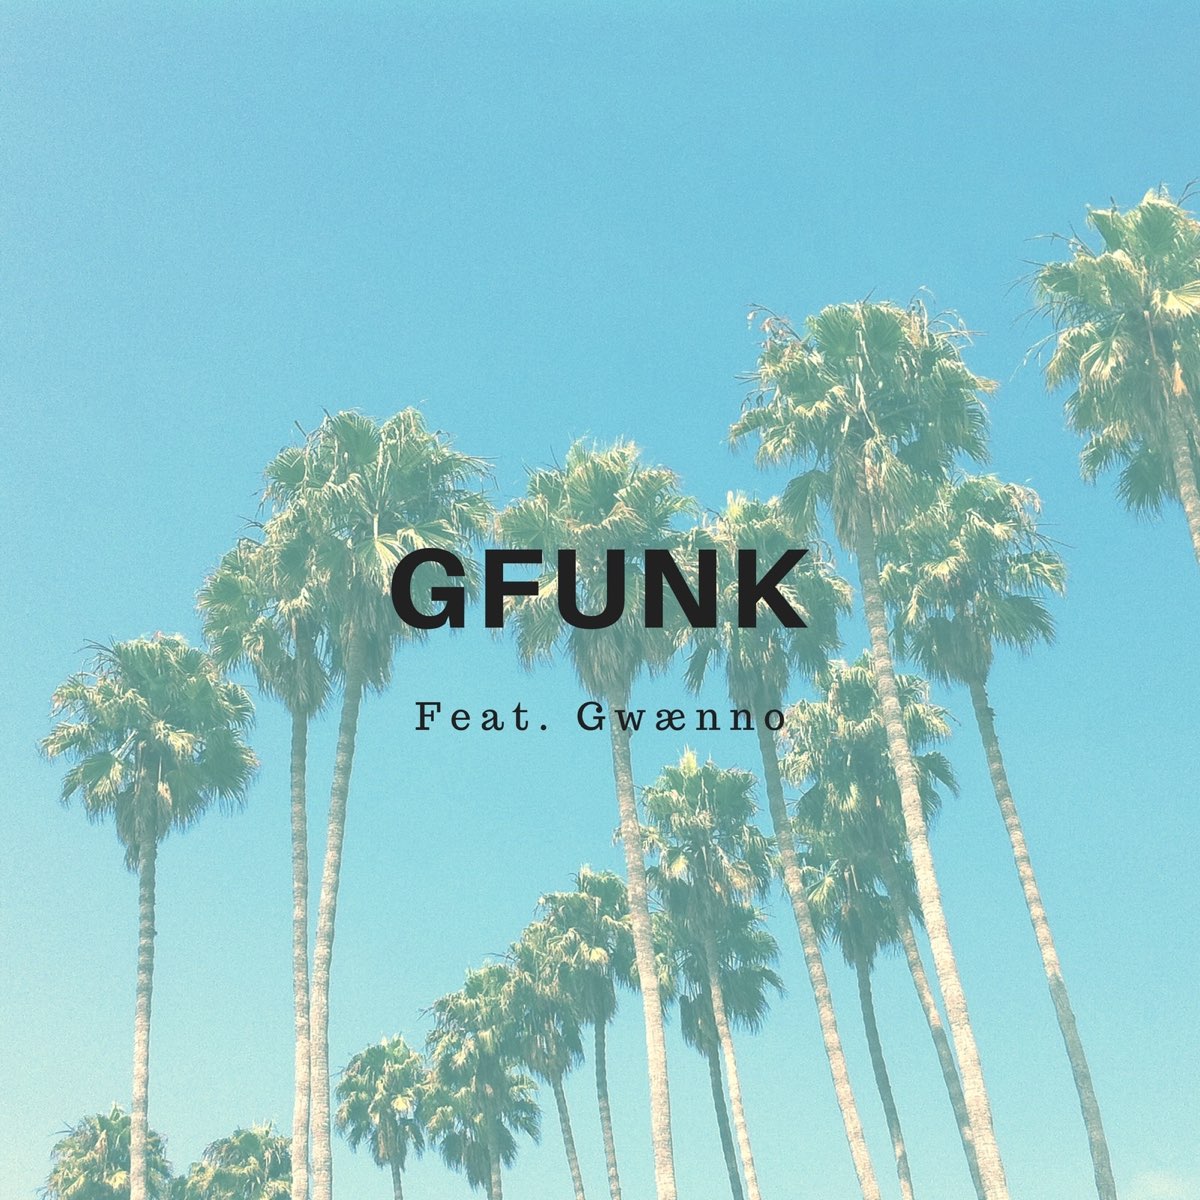 G Funk (feat. Gwænno) - Single by Bersang on Apple Music